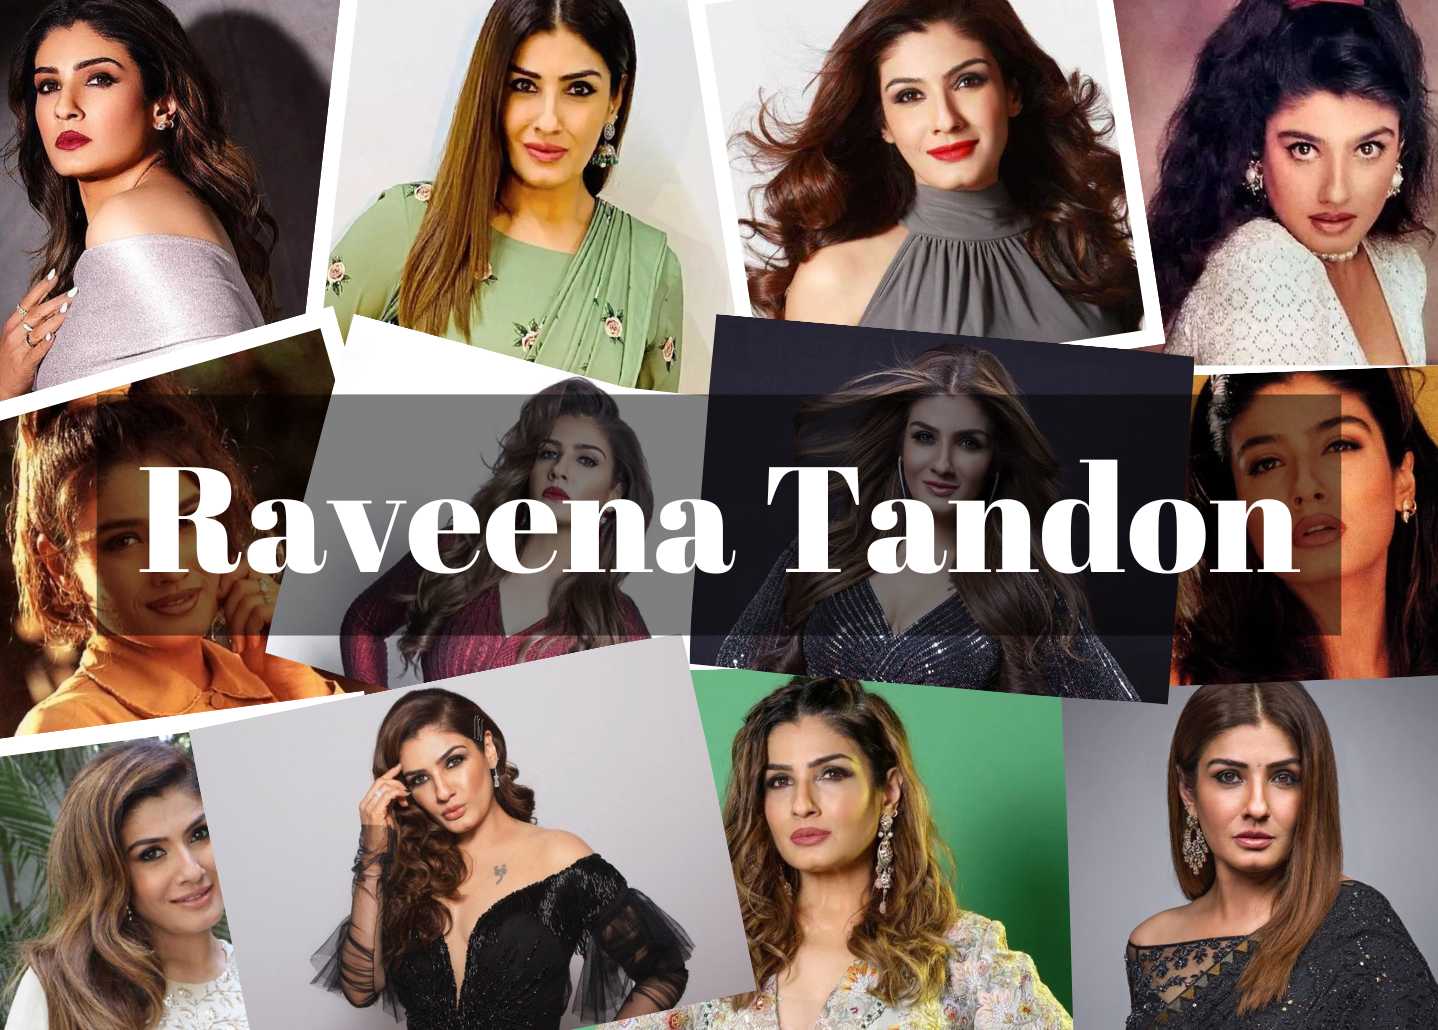 Raveena Tandon Famous Actress: Raveena came into films on Salman Khan's force, Nawaz Sharif is Ravee